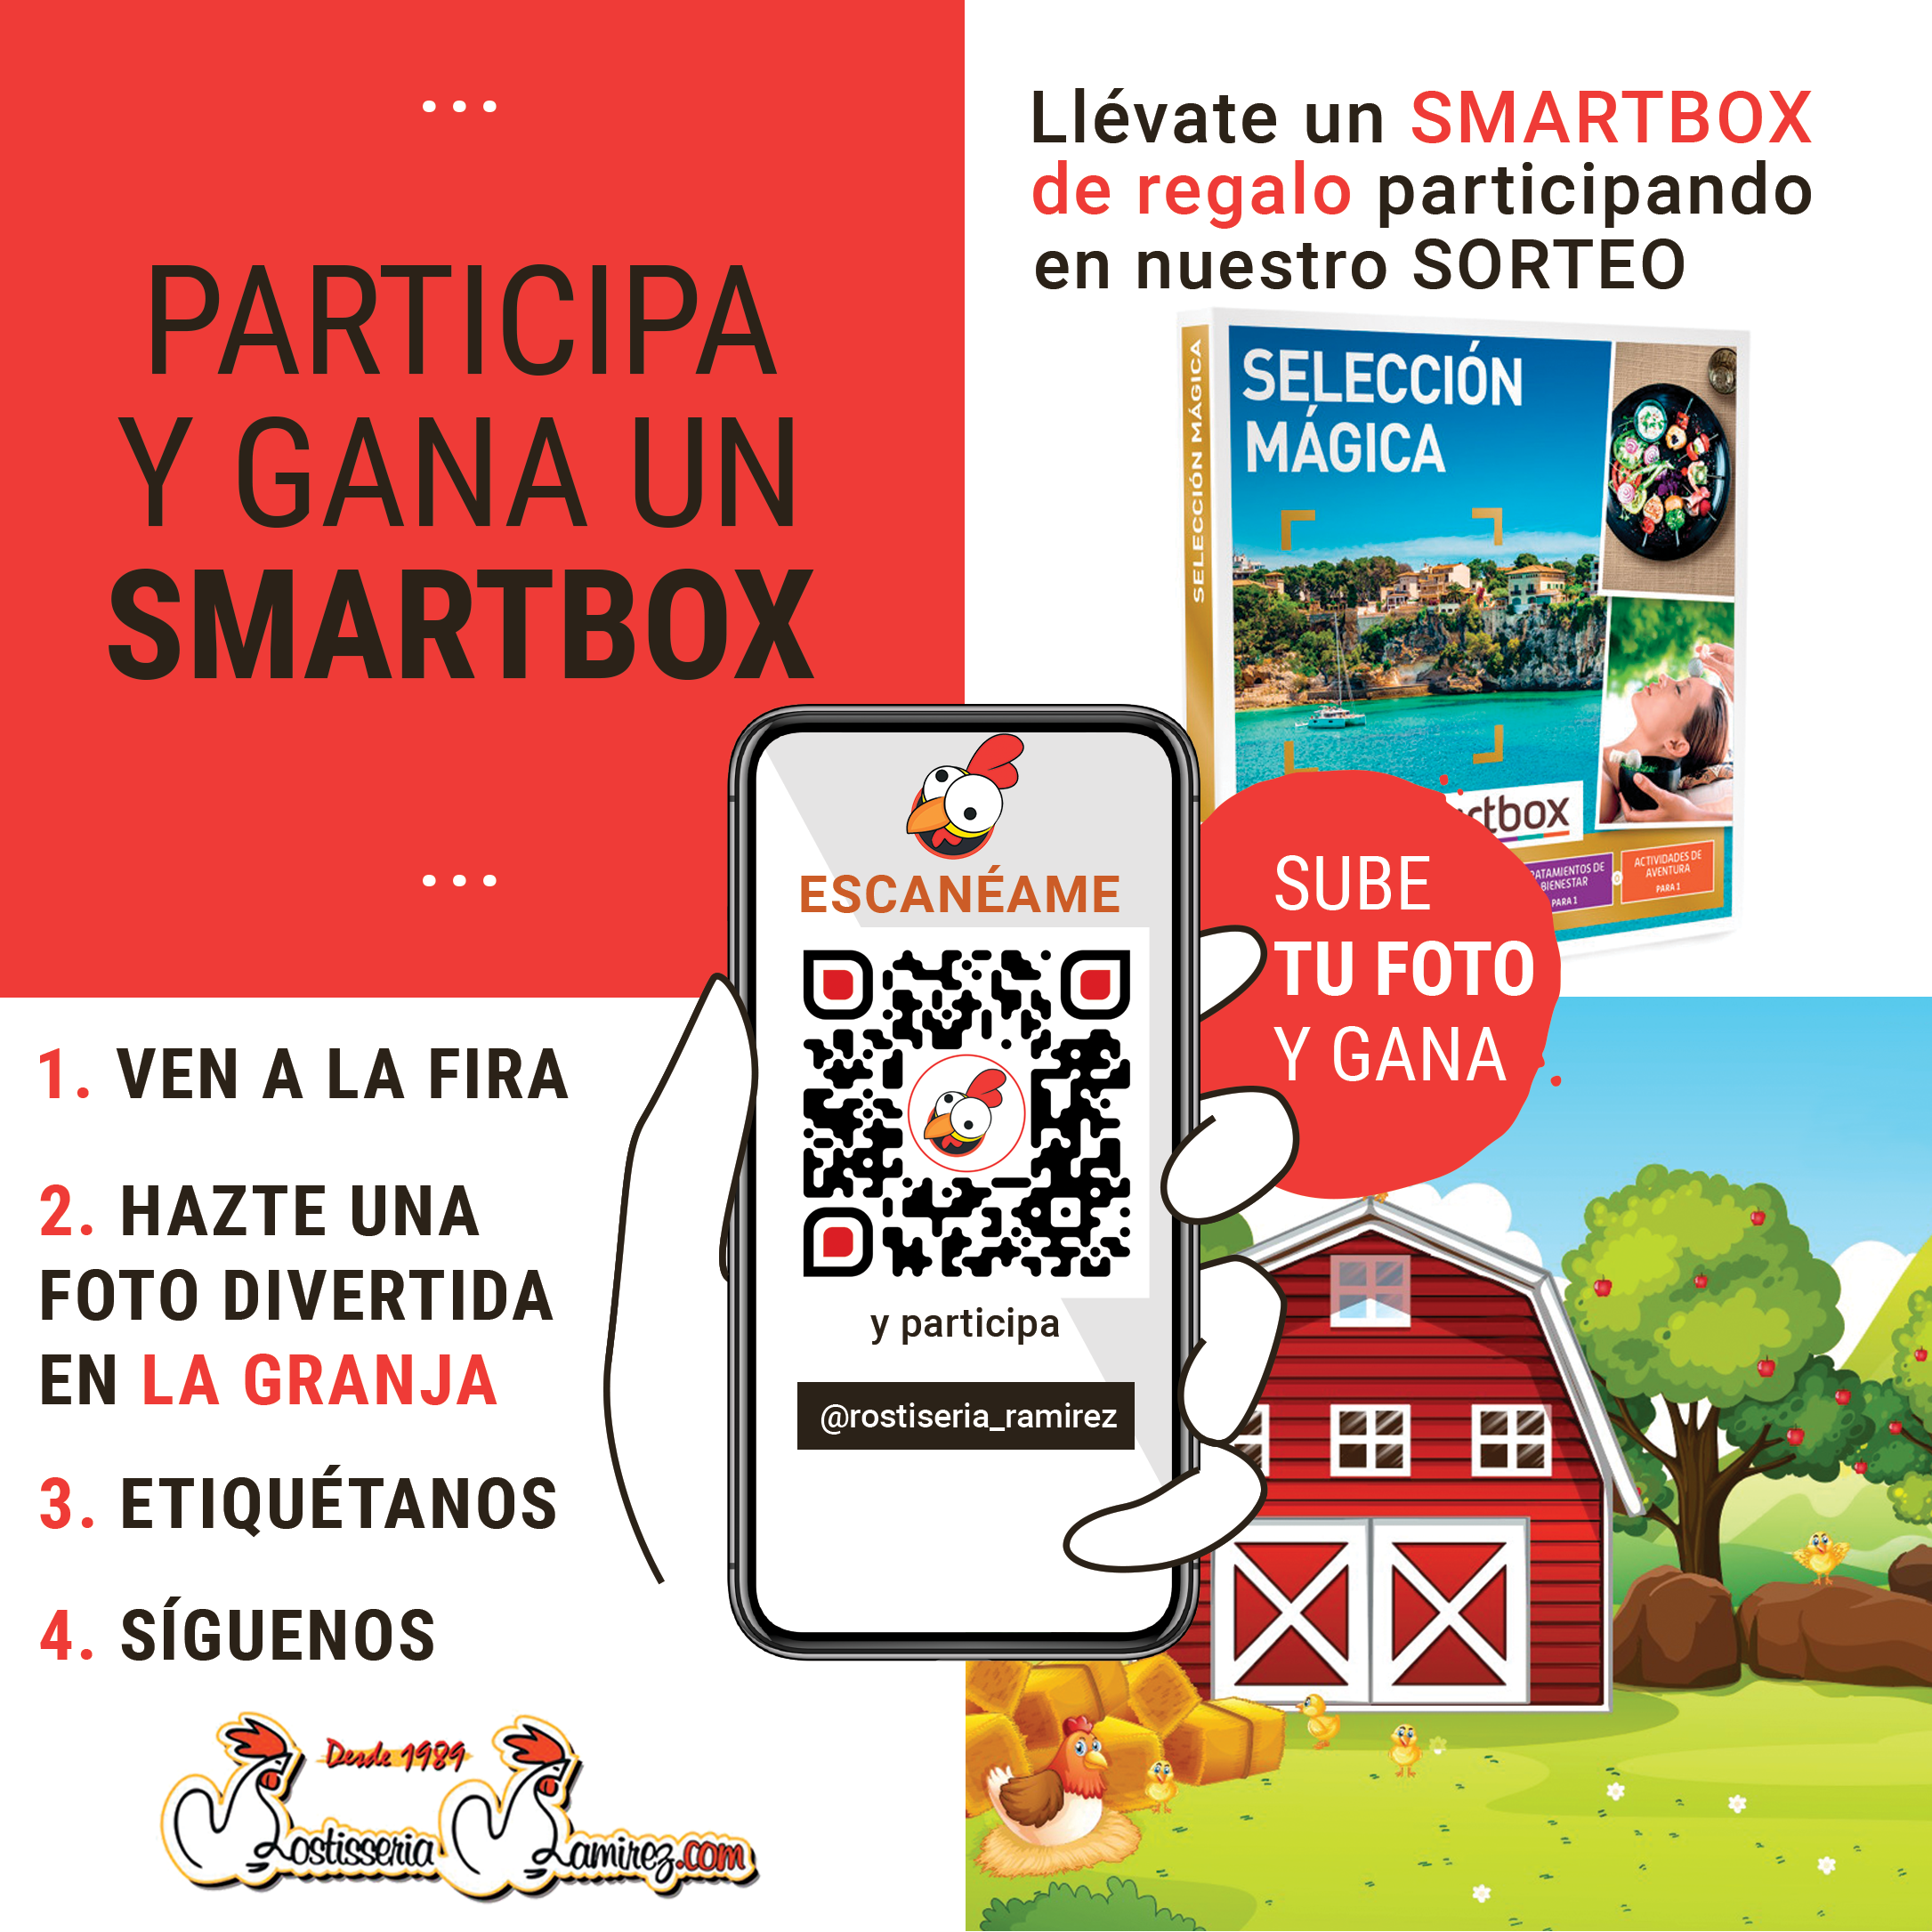 SORTEO SMARTBOX en Rostisseria Ramirez